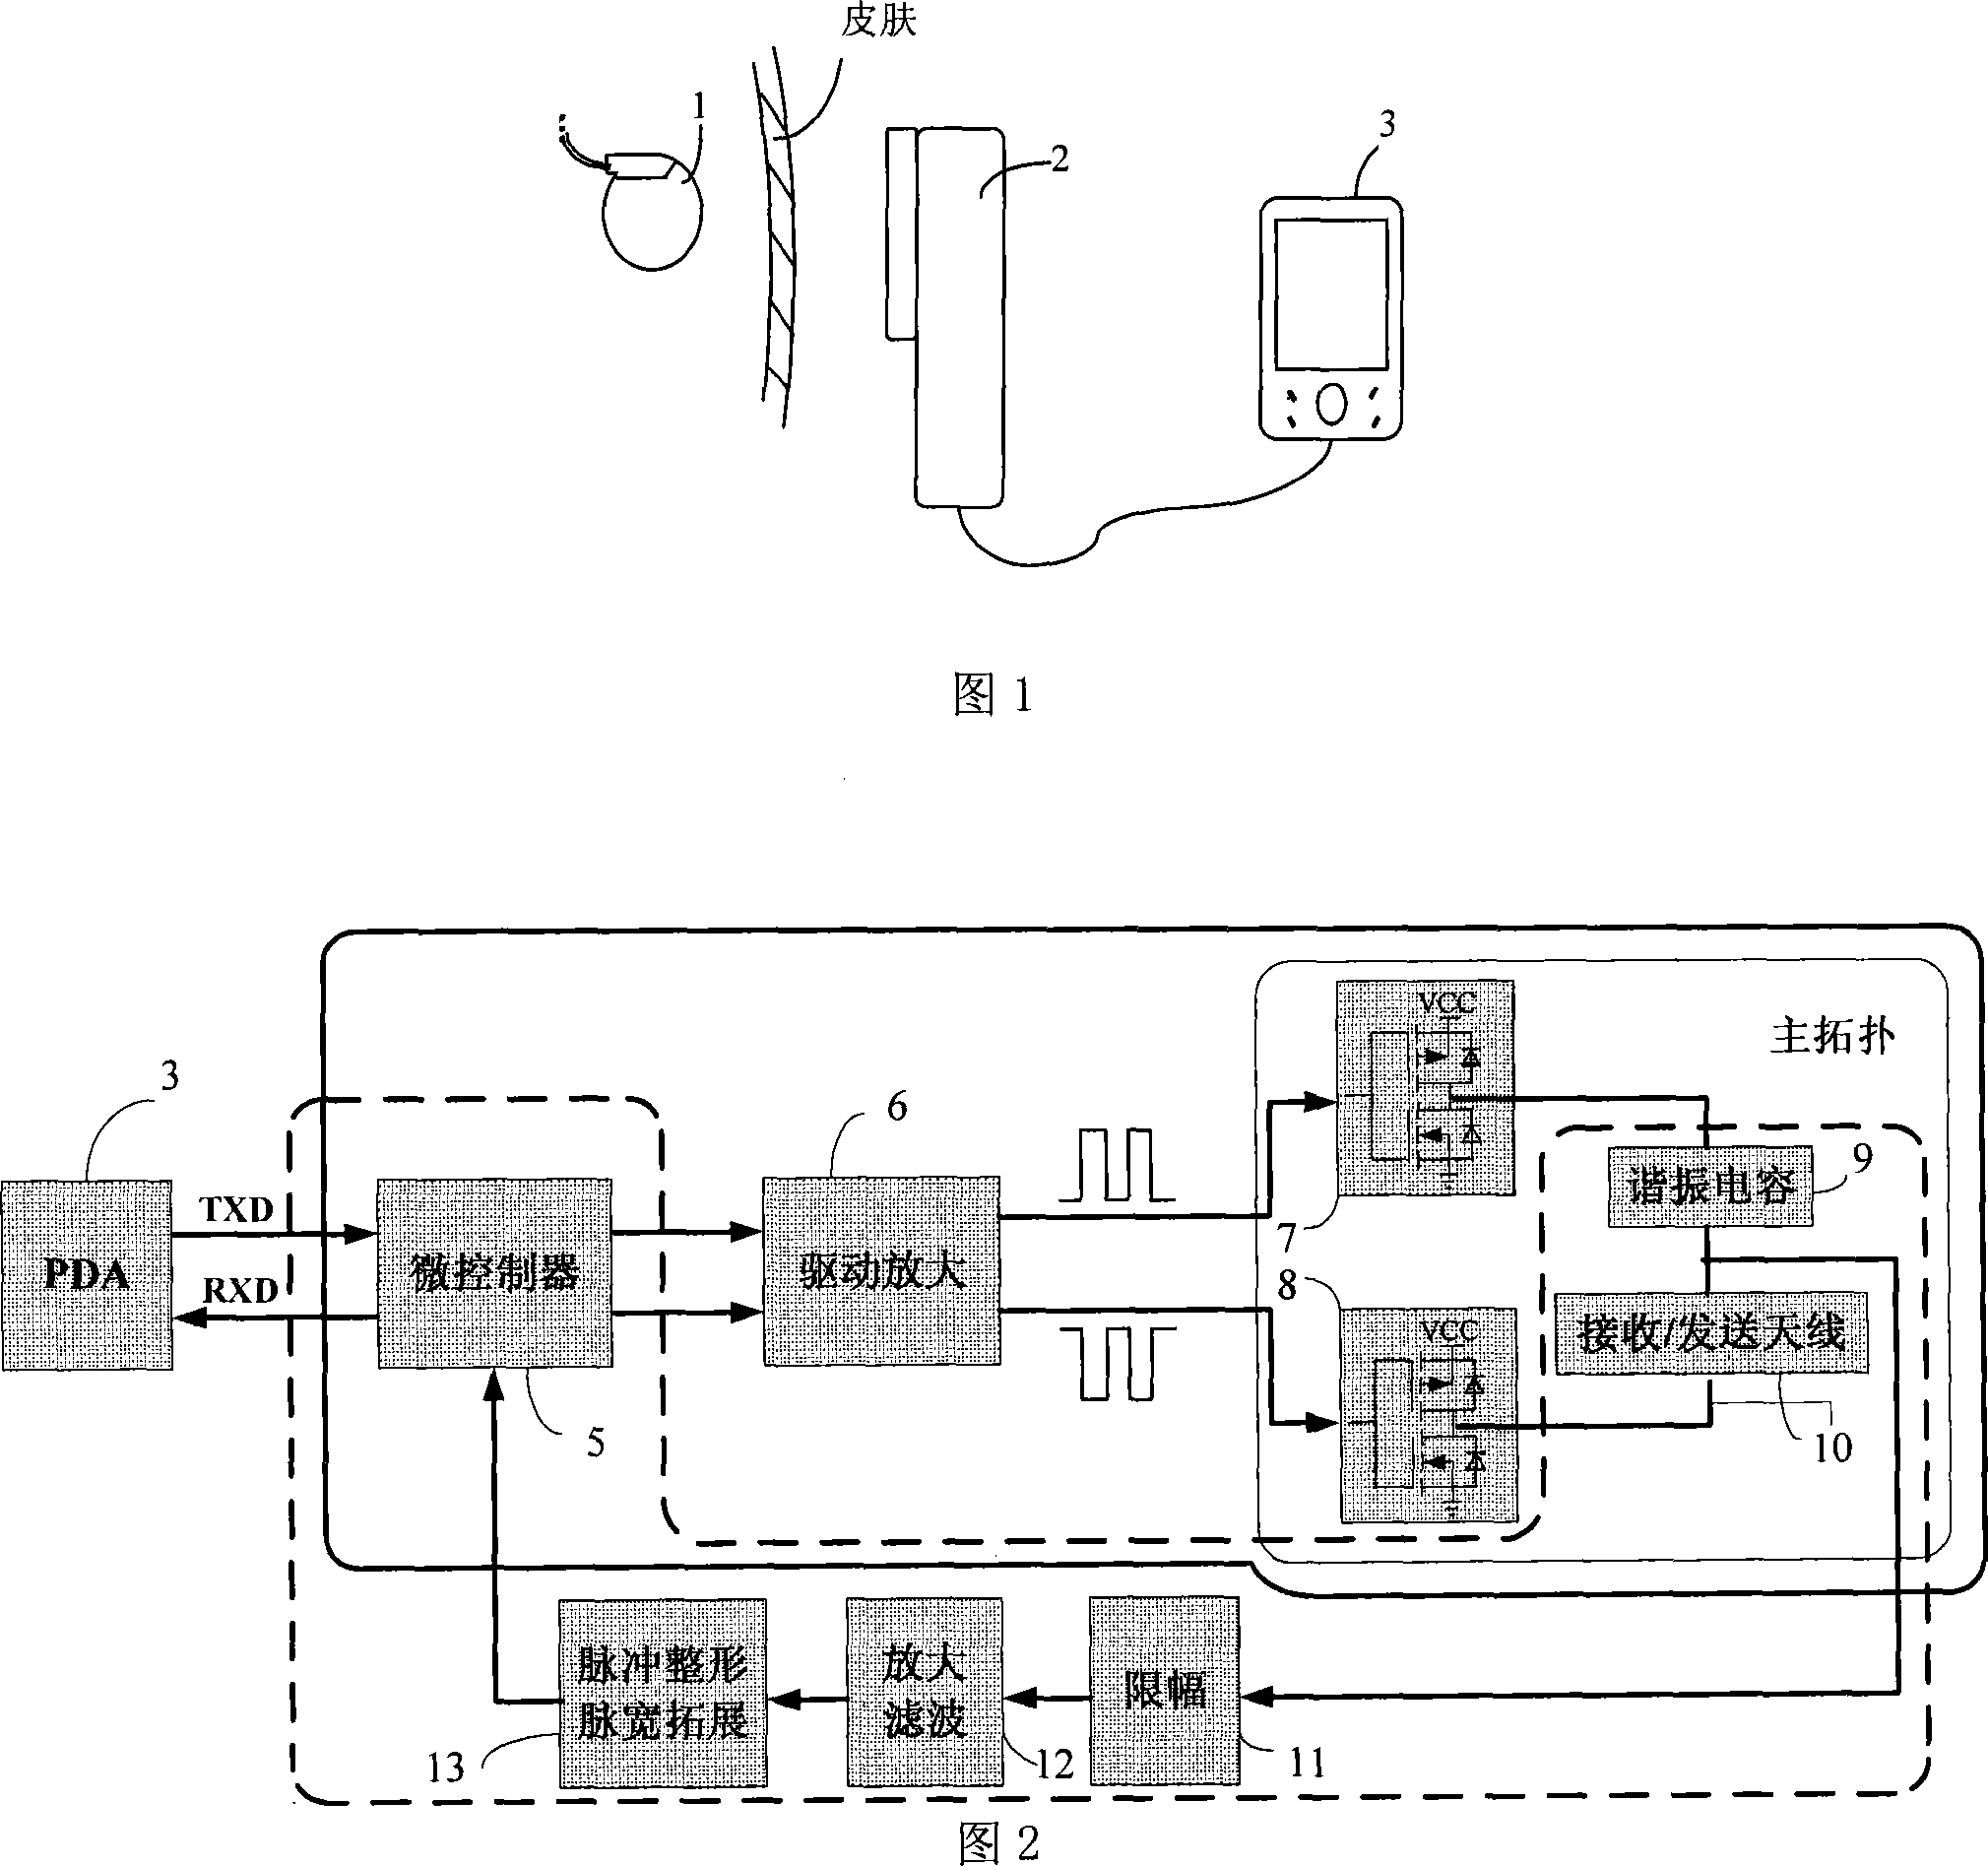 A percutaneous biphasic radio communication device based on PPM type of modulation